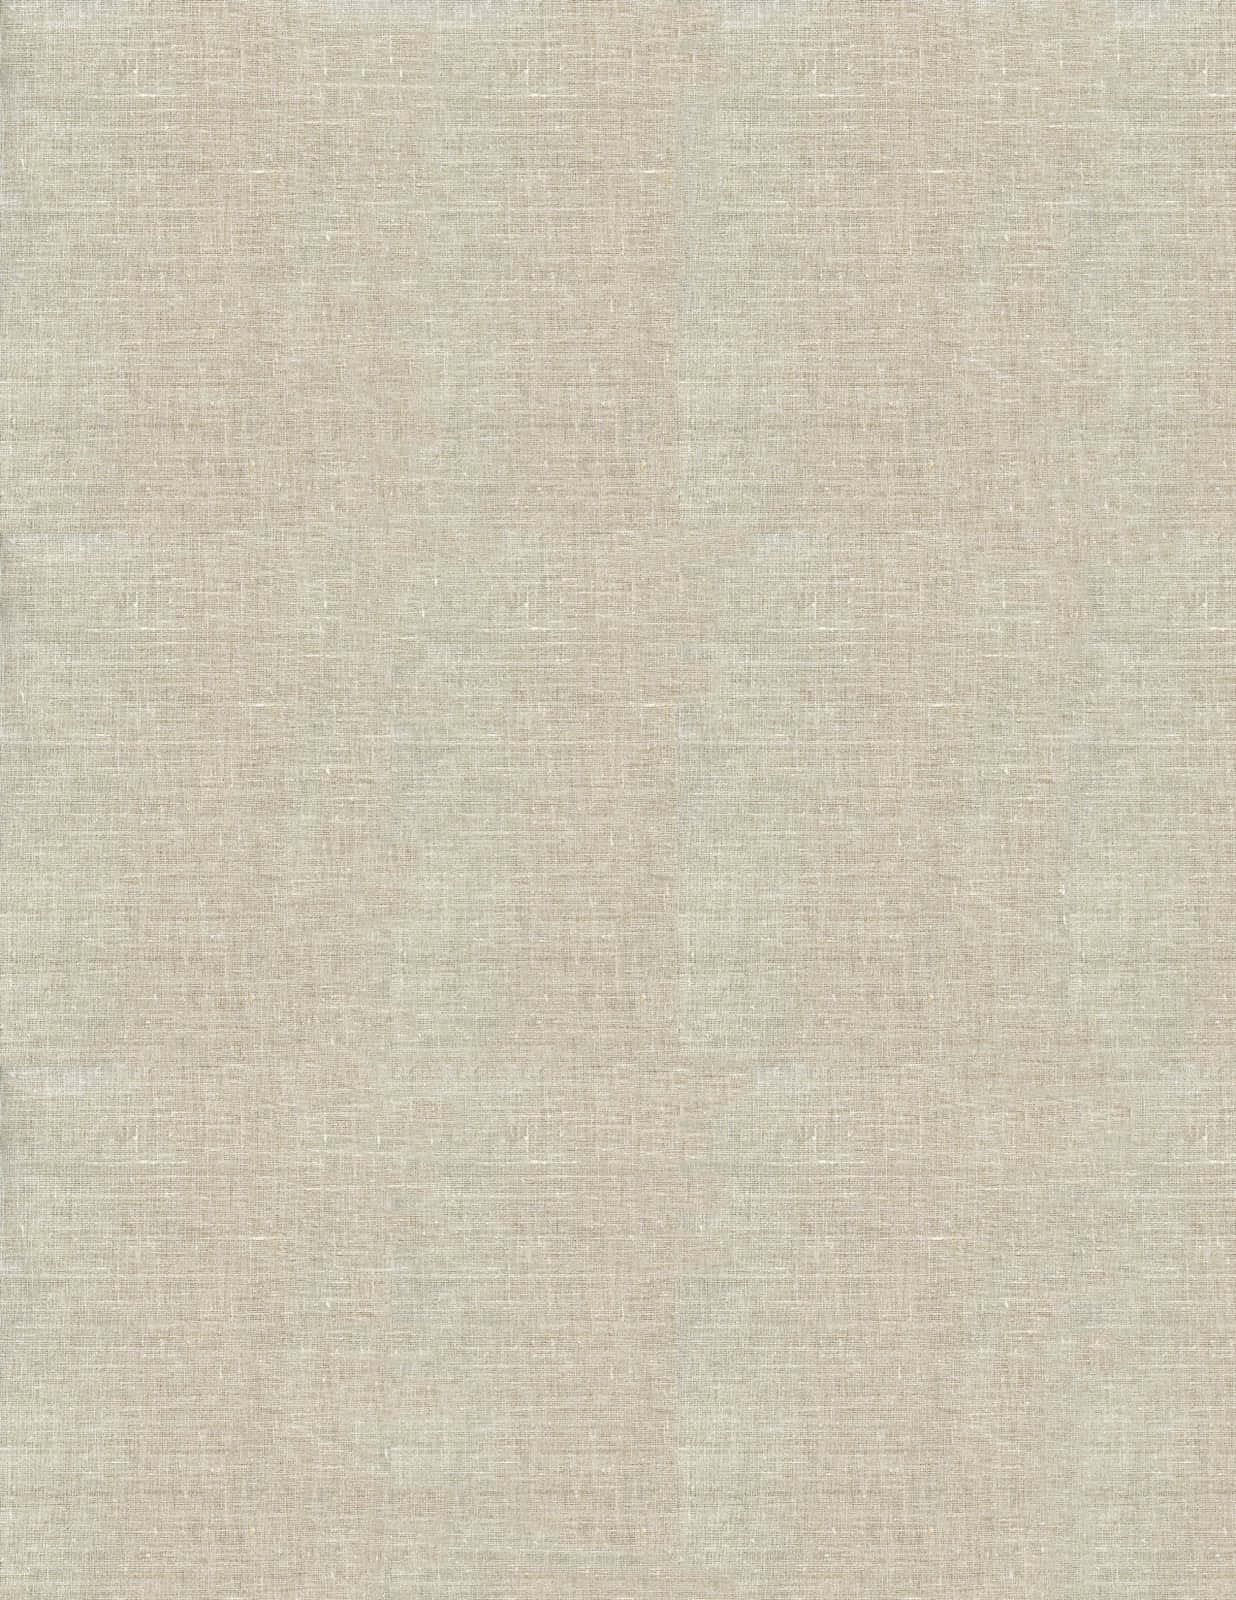 Elegant White Linen Texture Background